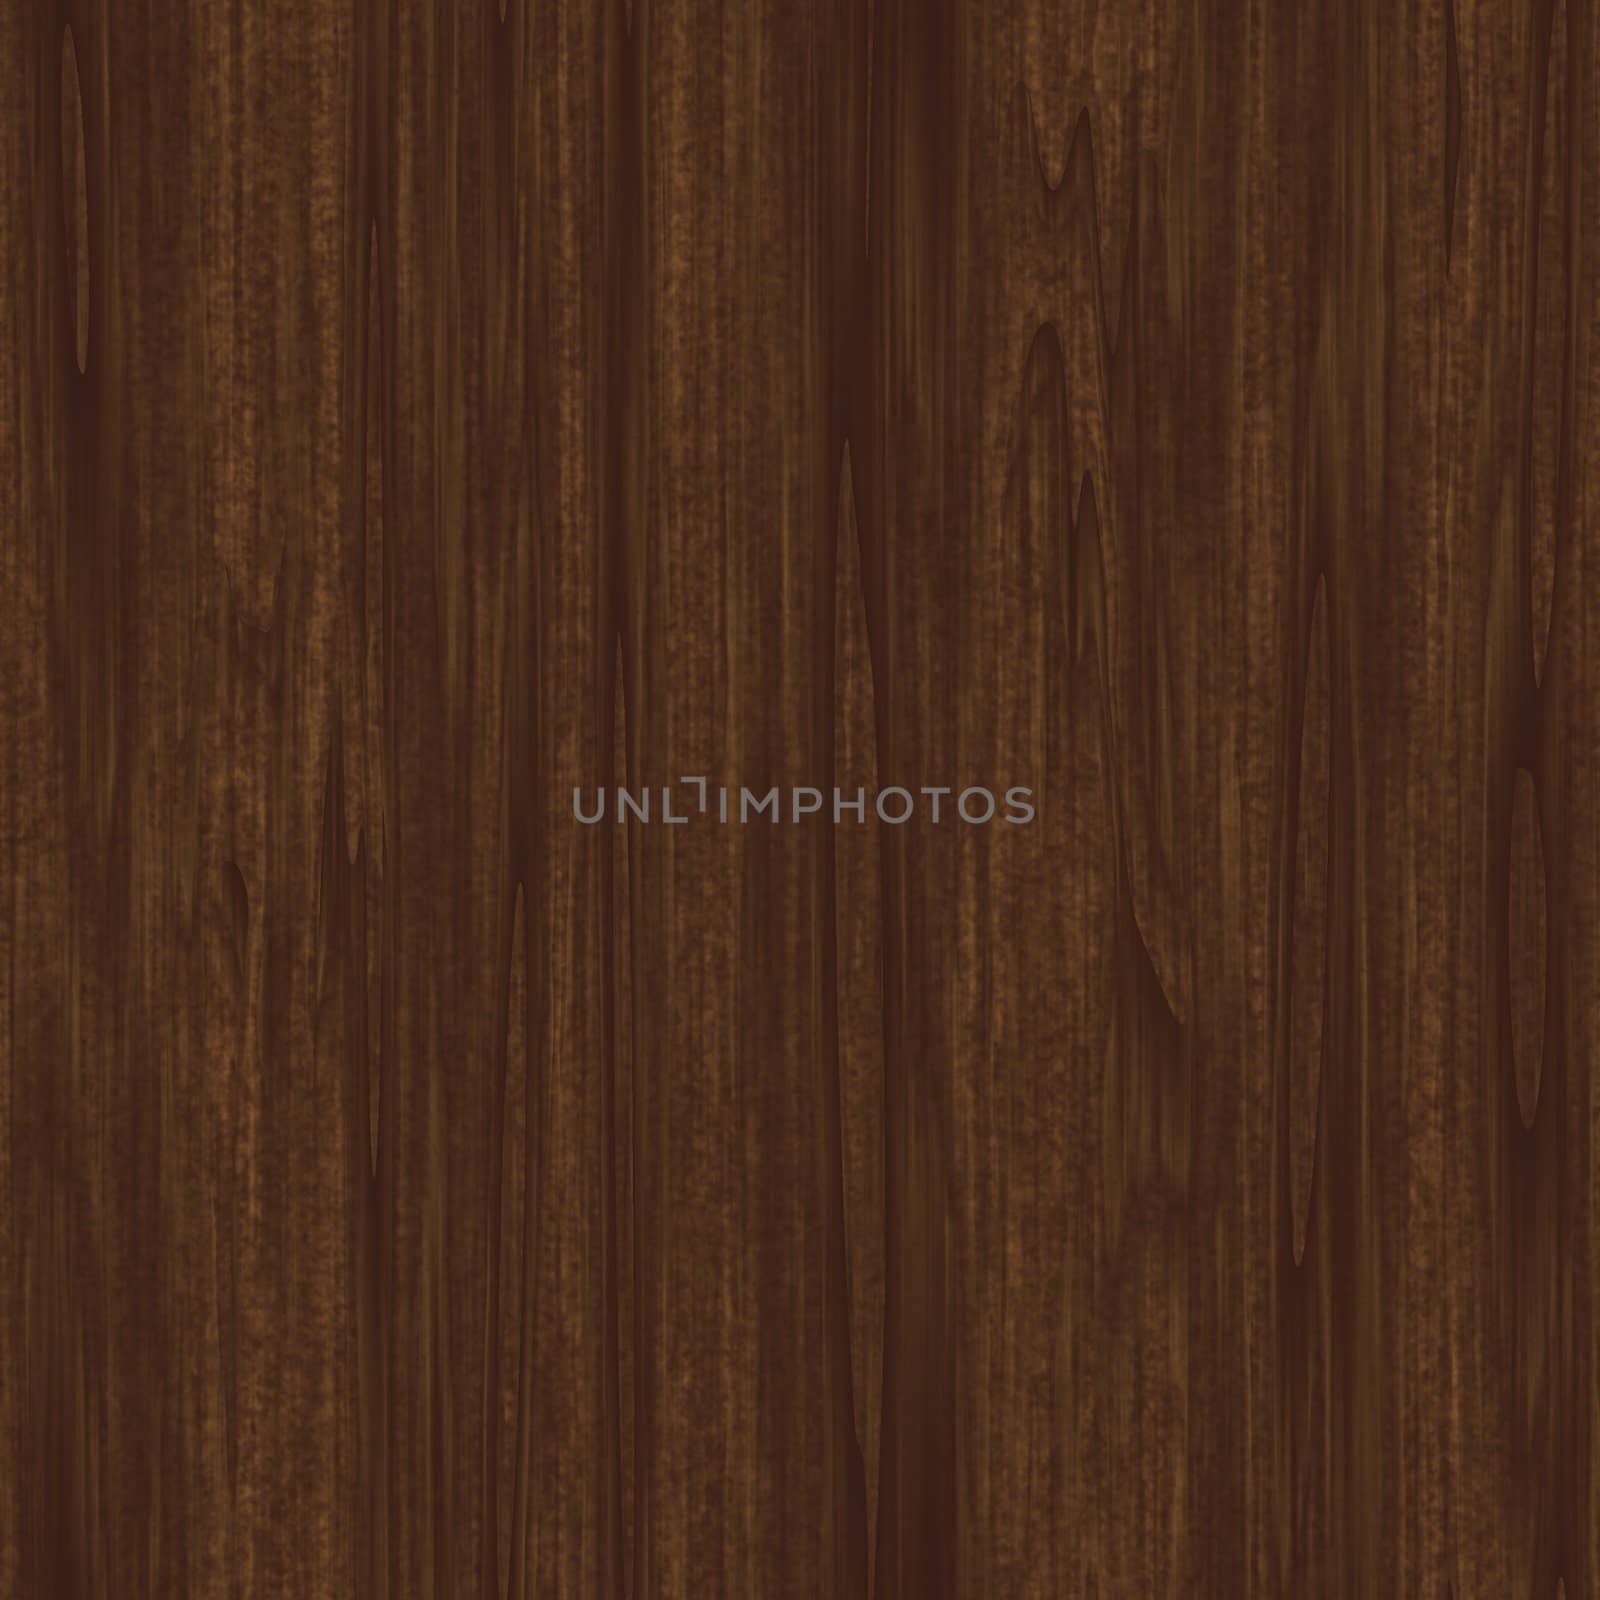 Wood Pattern Background Art as Design Element